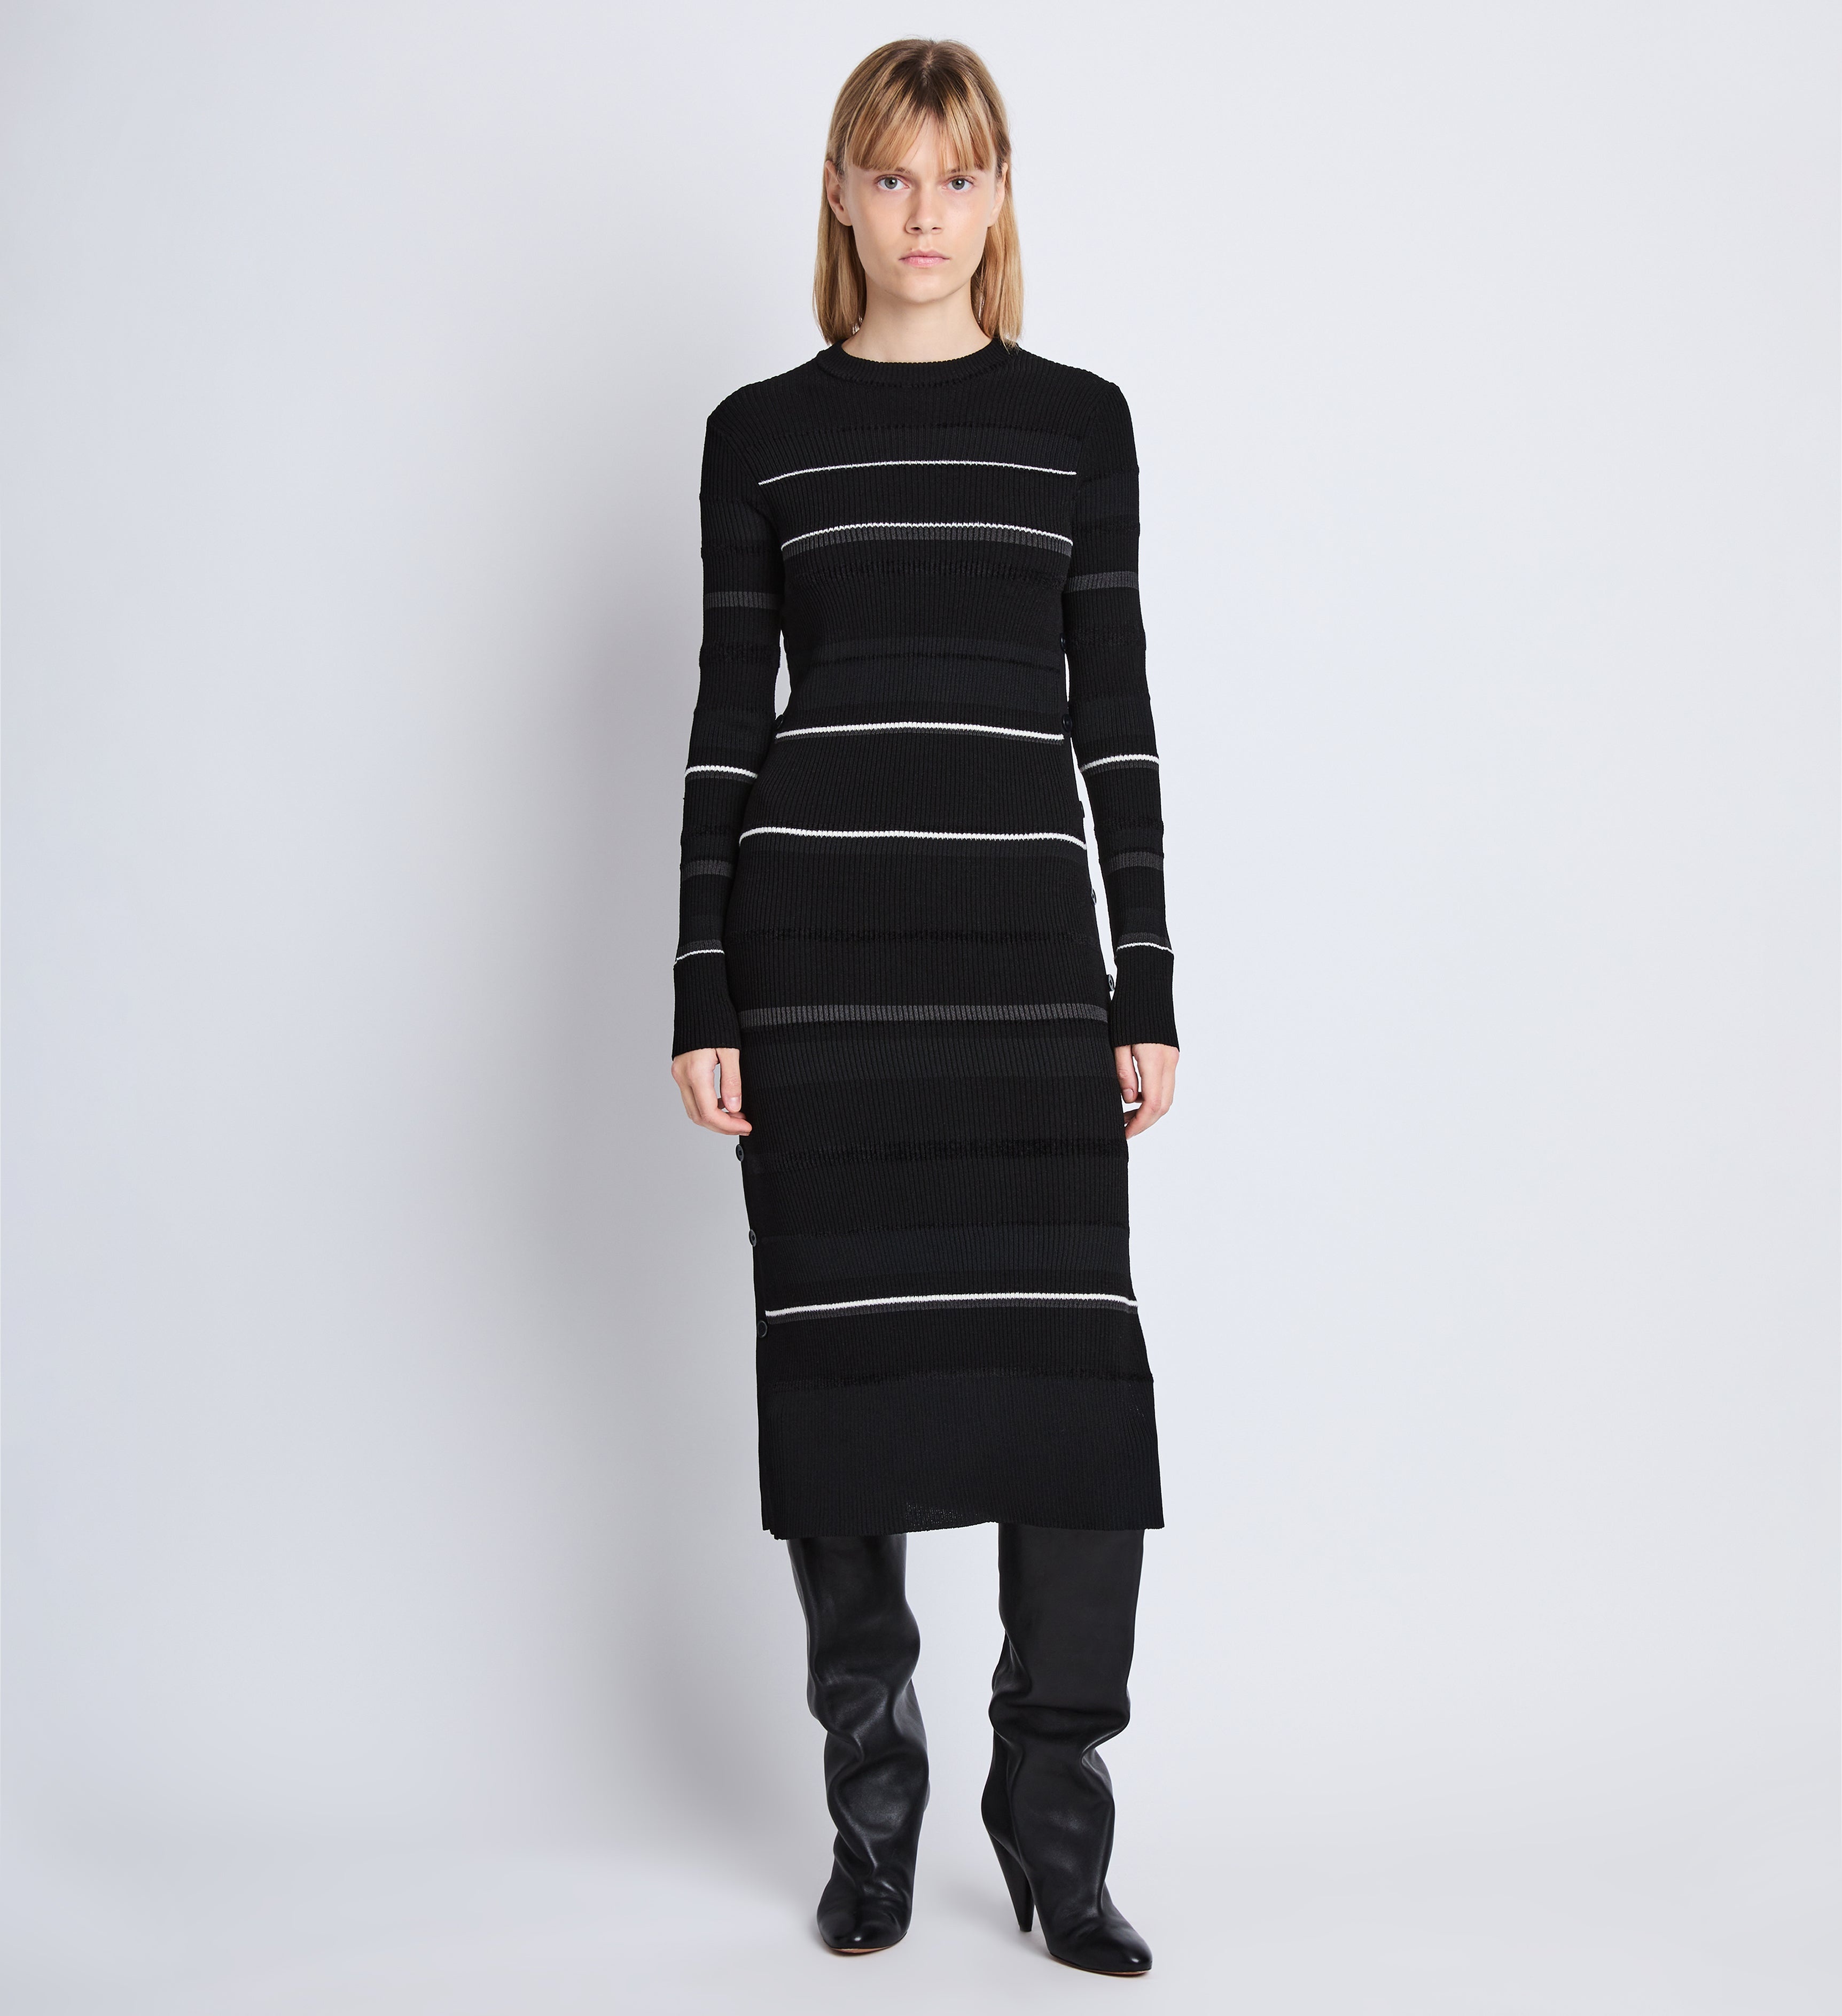 Rachel Dress in Textured Striped Knit - 2